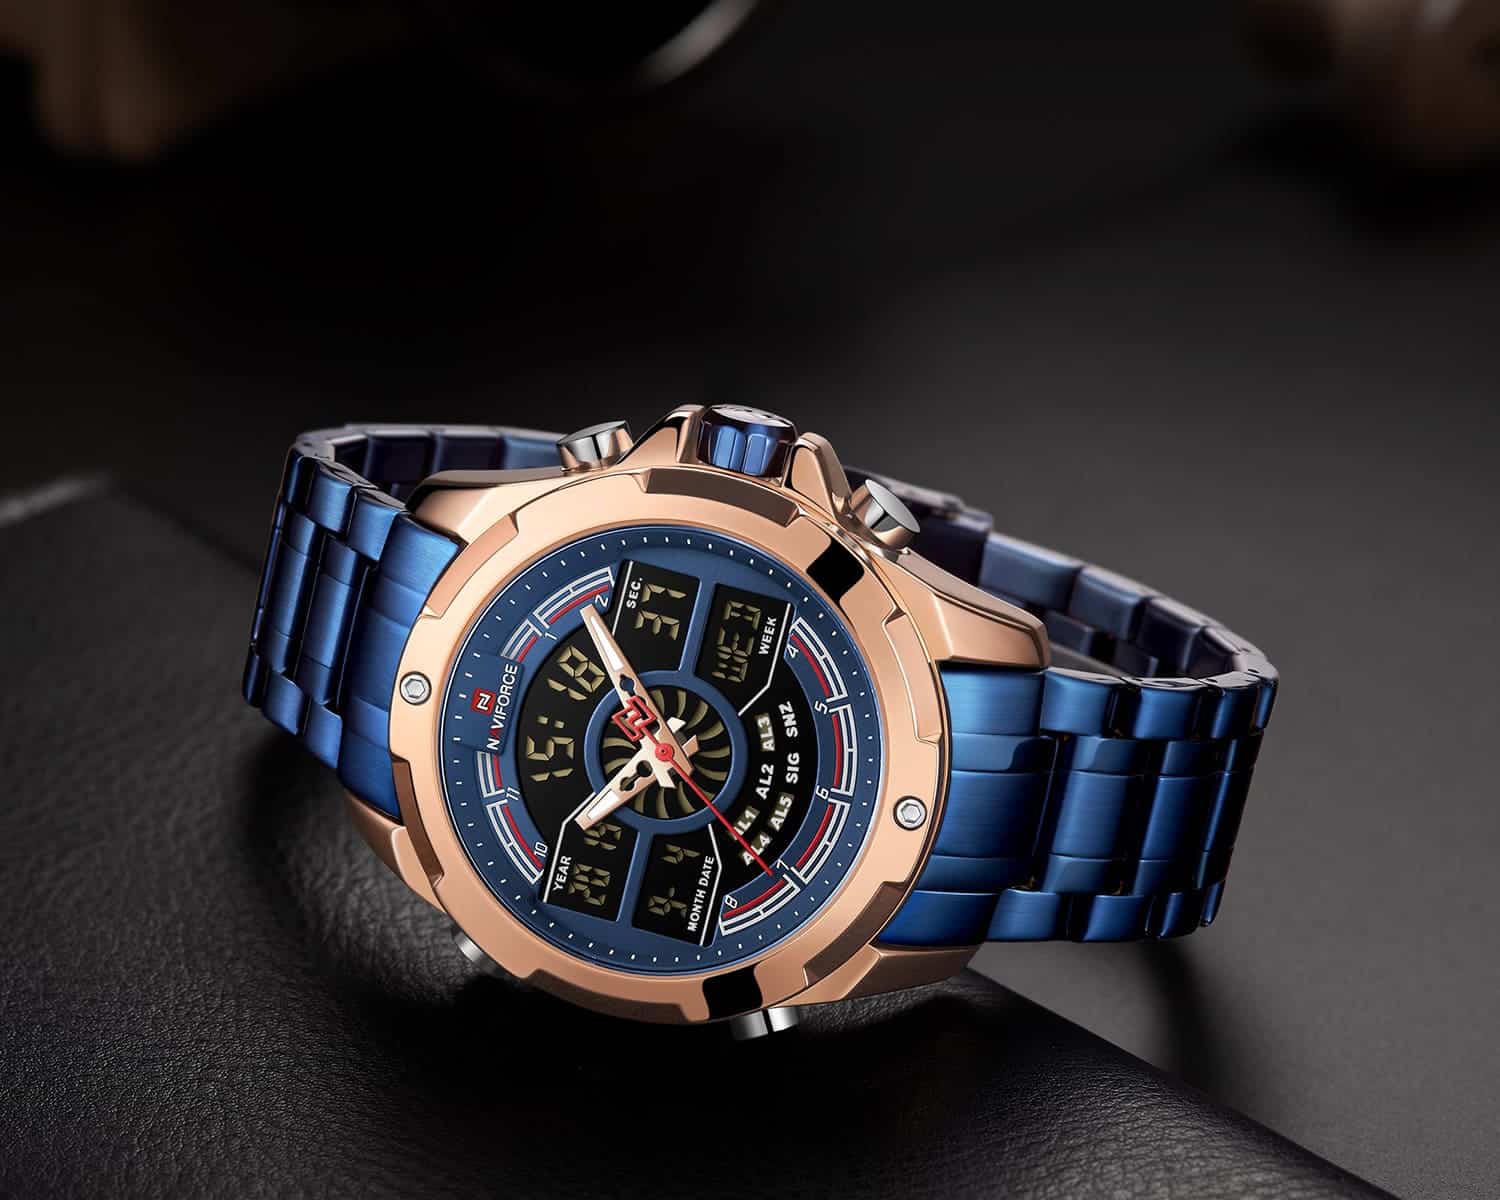 Naviforce Men's Watch NF9170 RG BE | Watches Prime